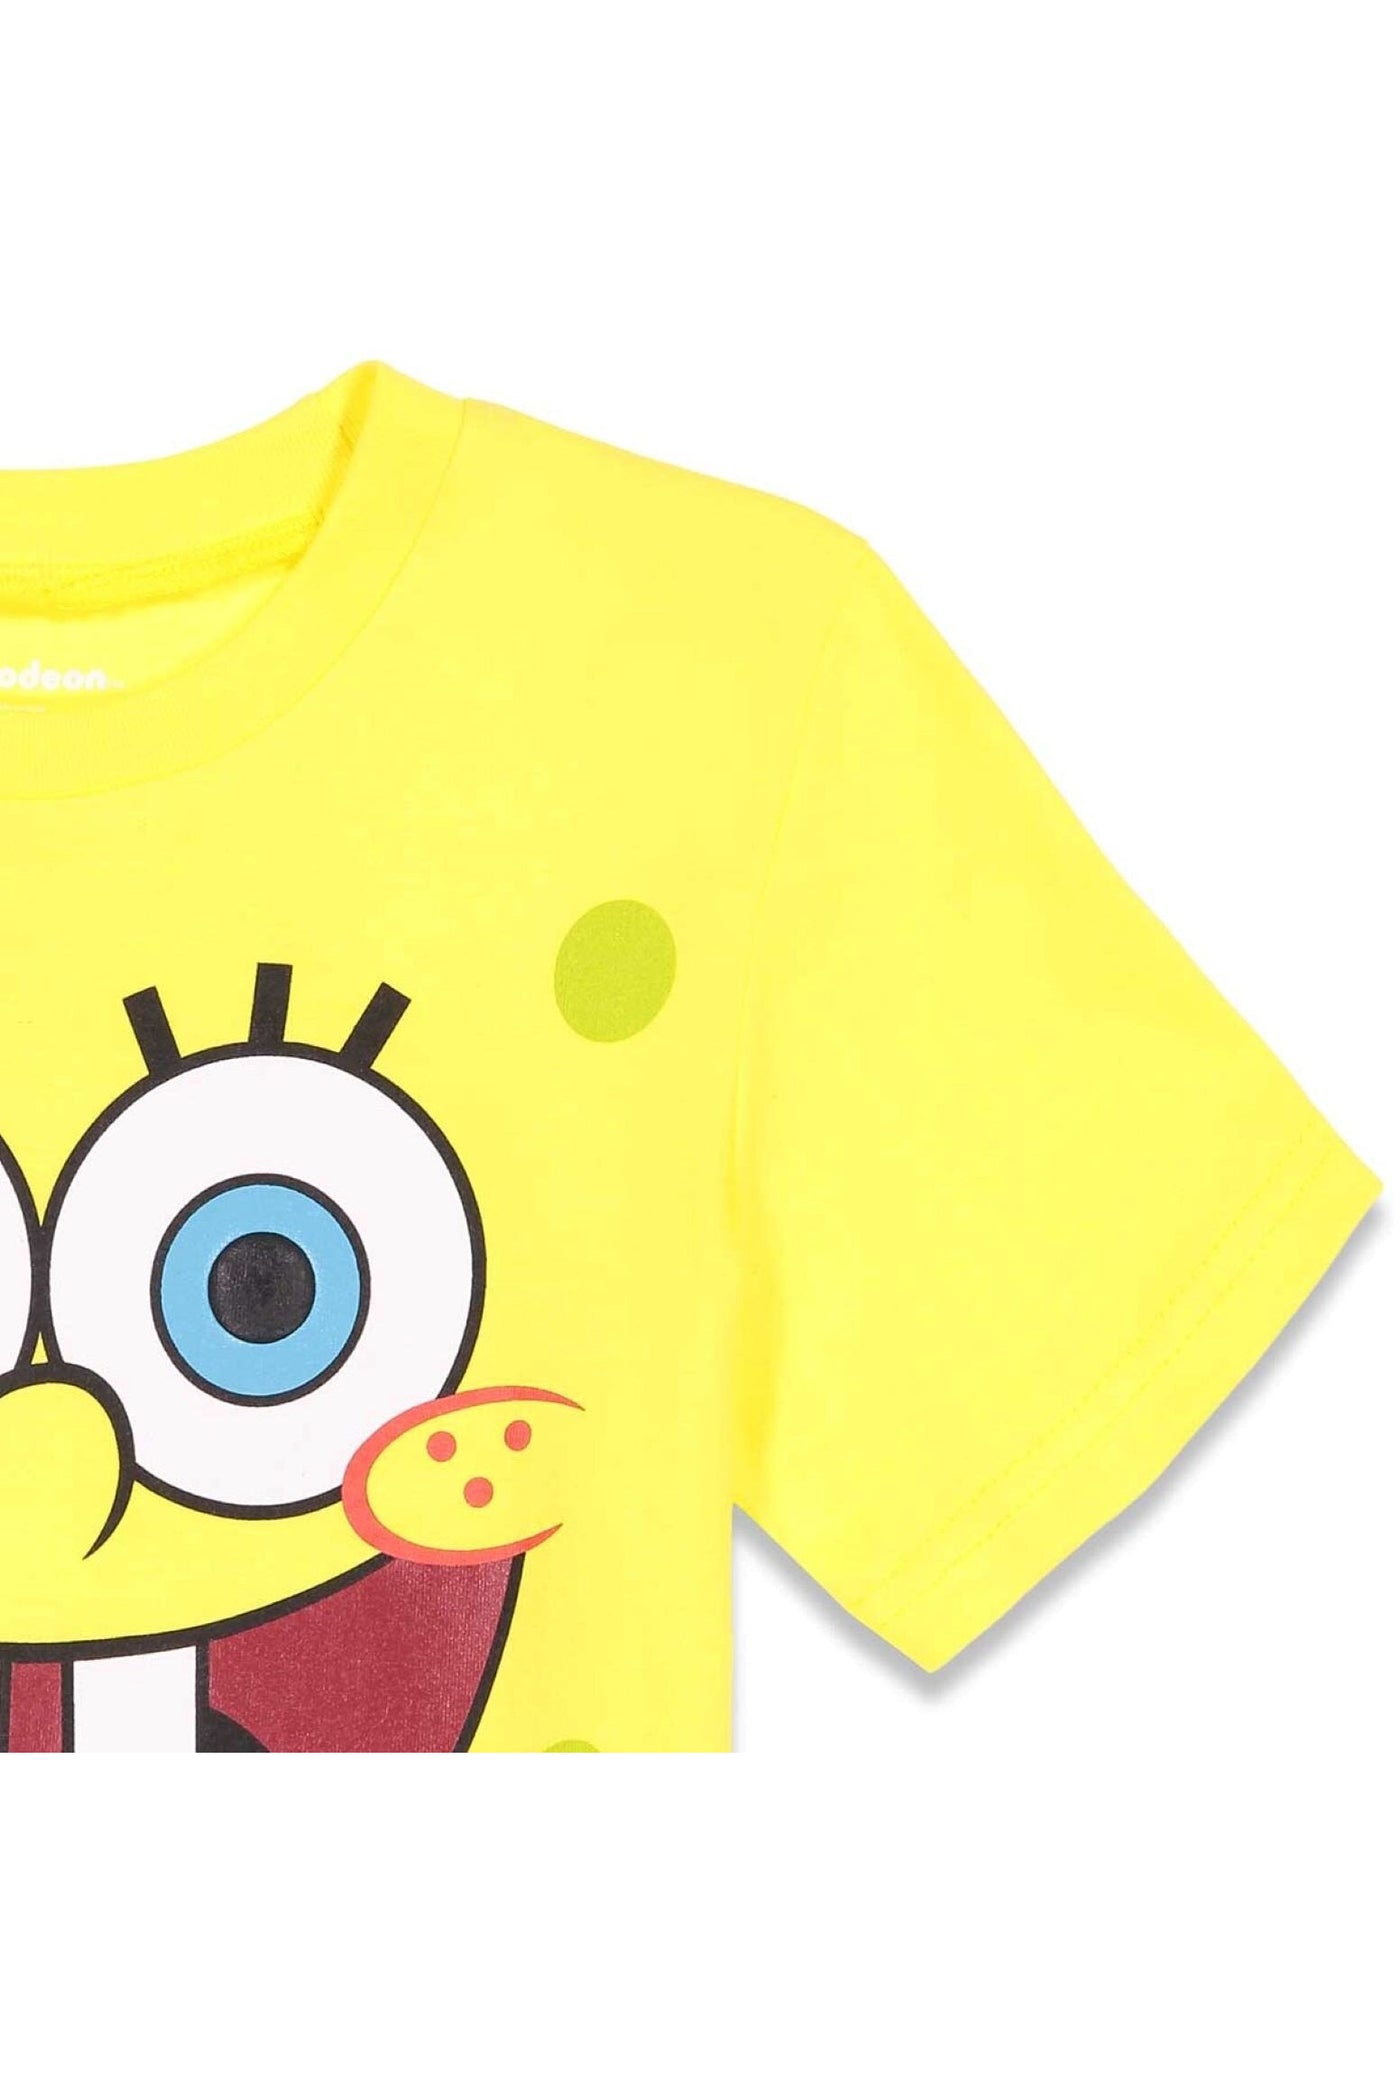 SpongeBob SquarePants T-Shirt and Mesh Shorts Outfit Set